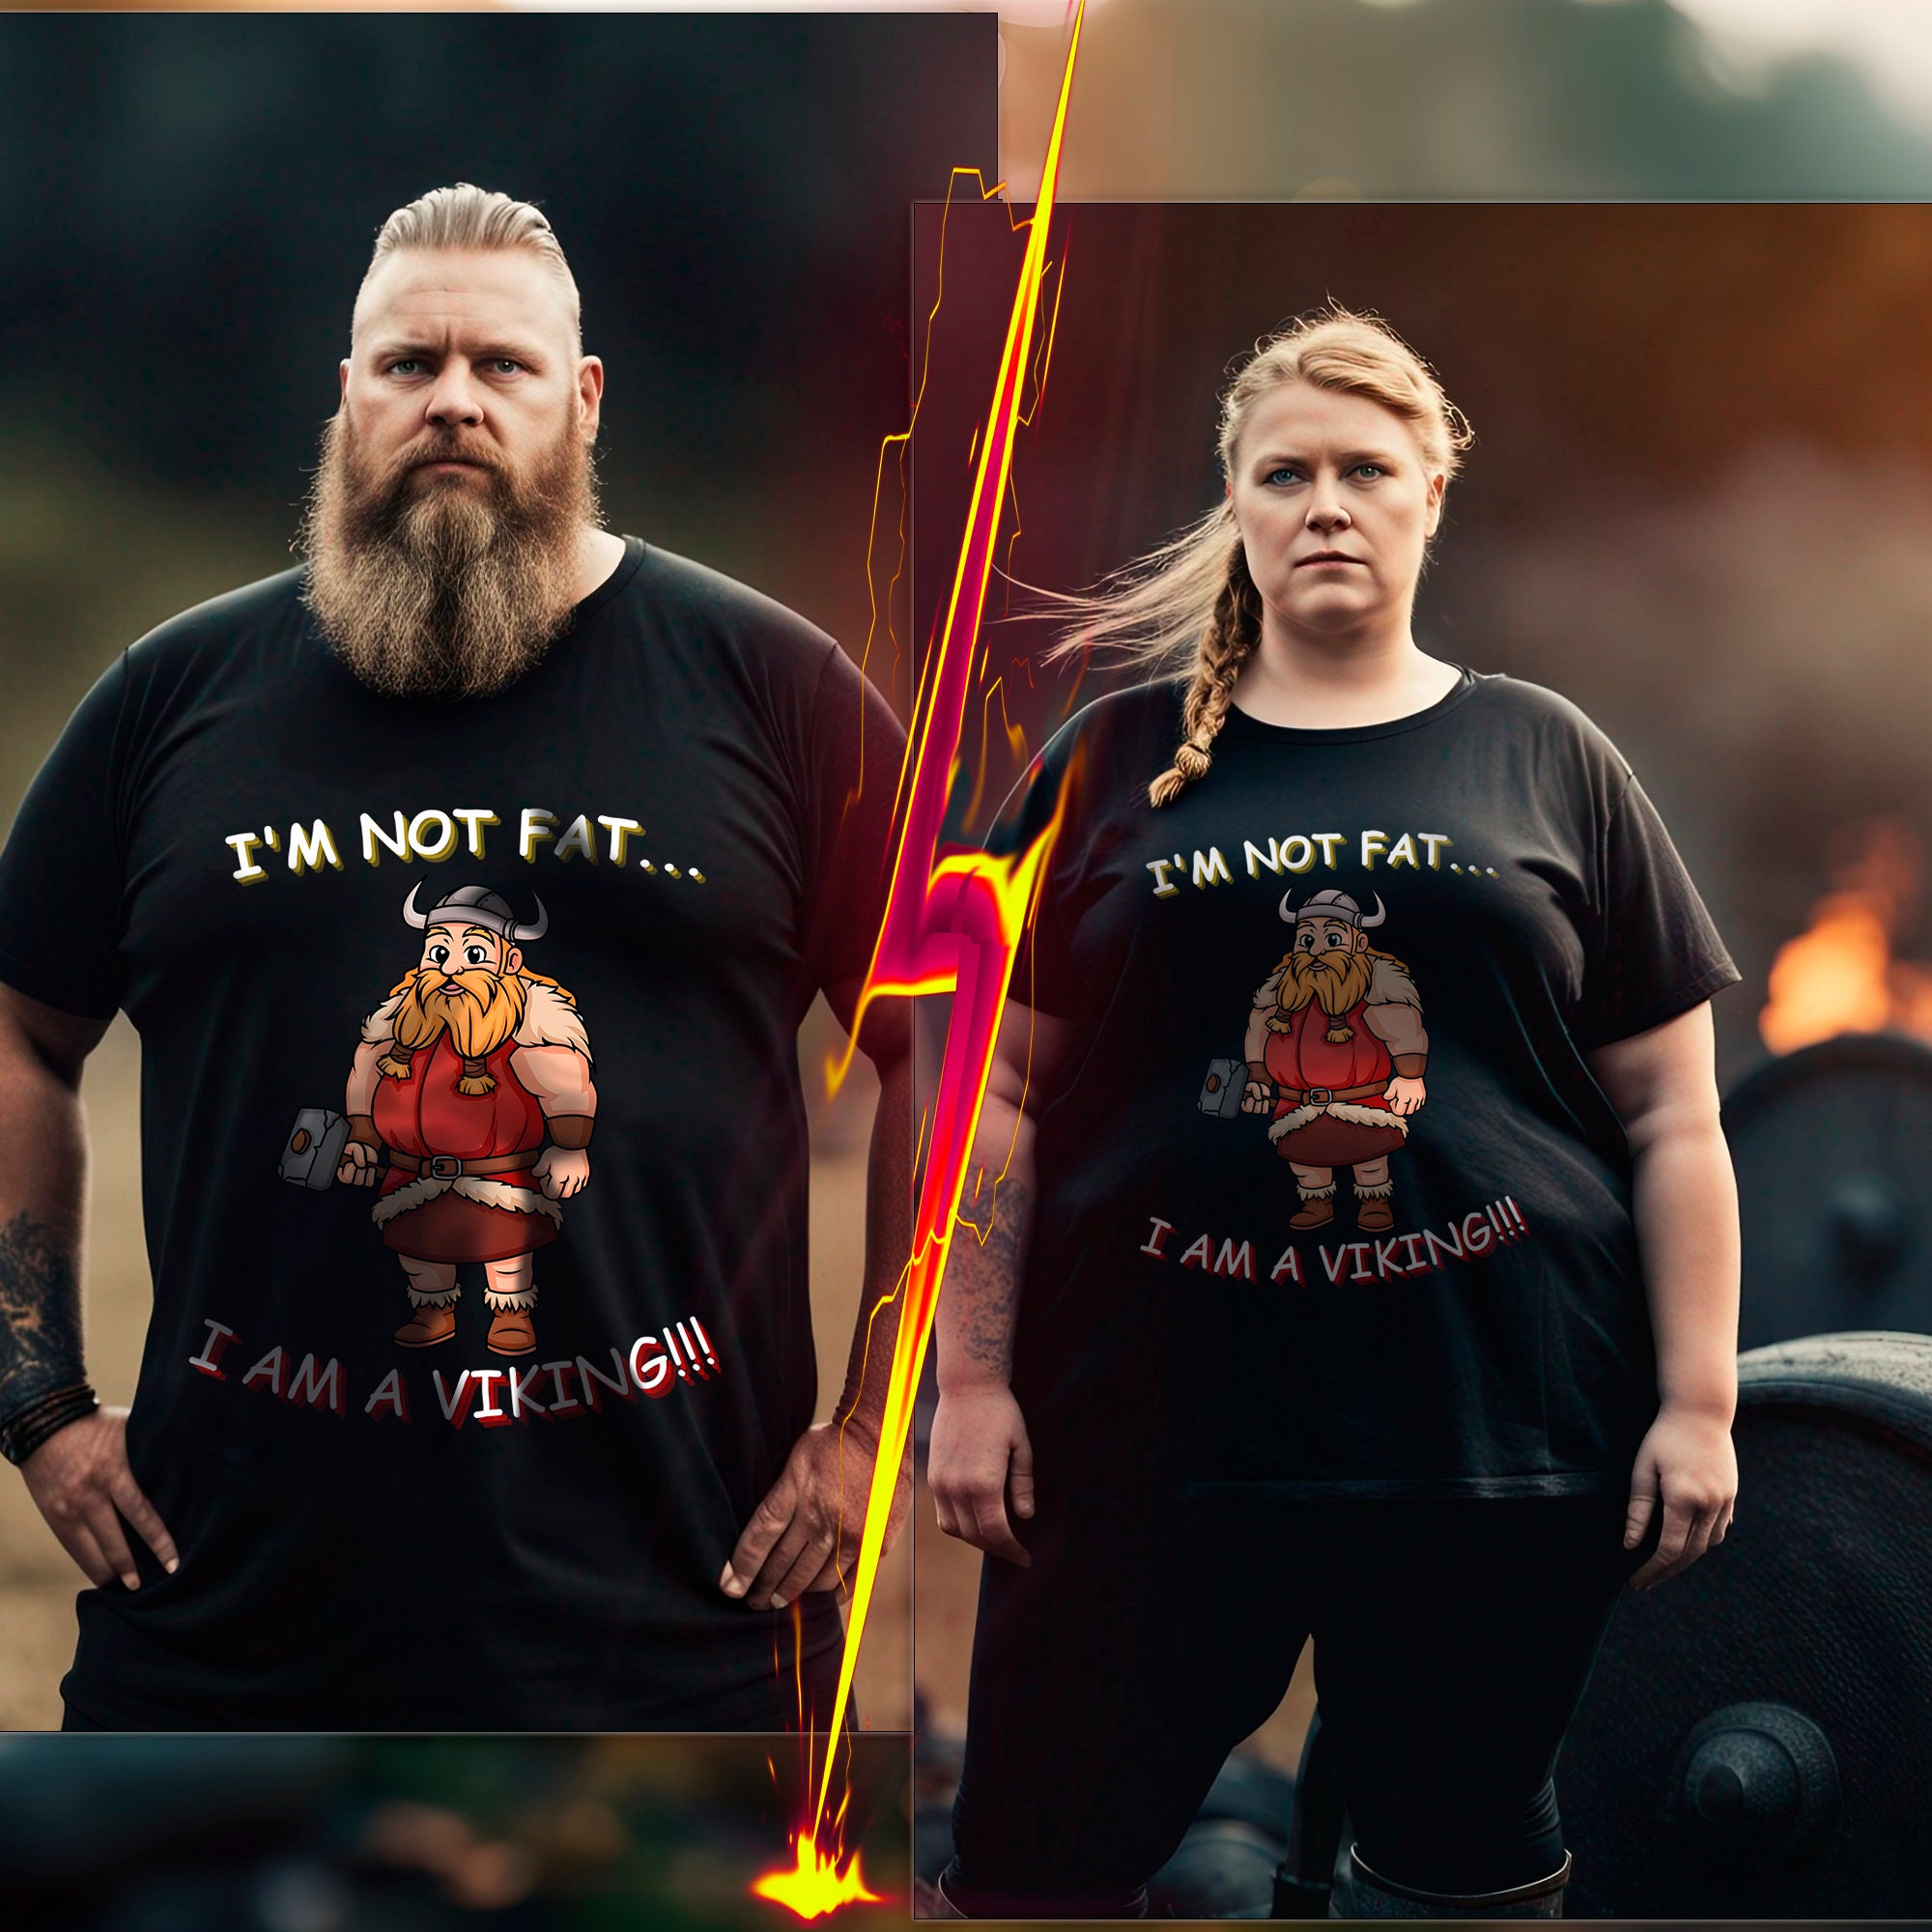 Shieldmaiden, Viking, Norse, Gym t-shirt & apparel, I'm A Shieldmaiden,  Front